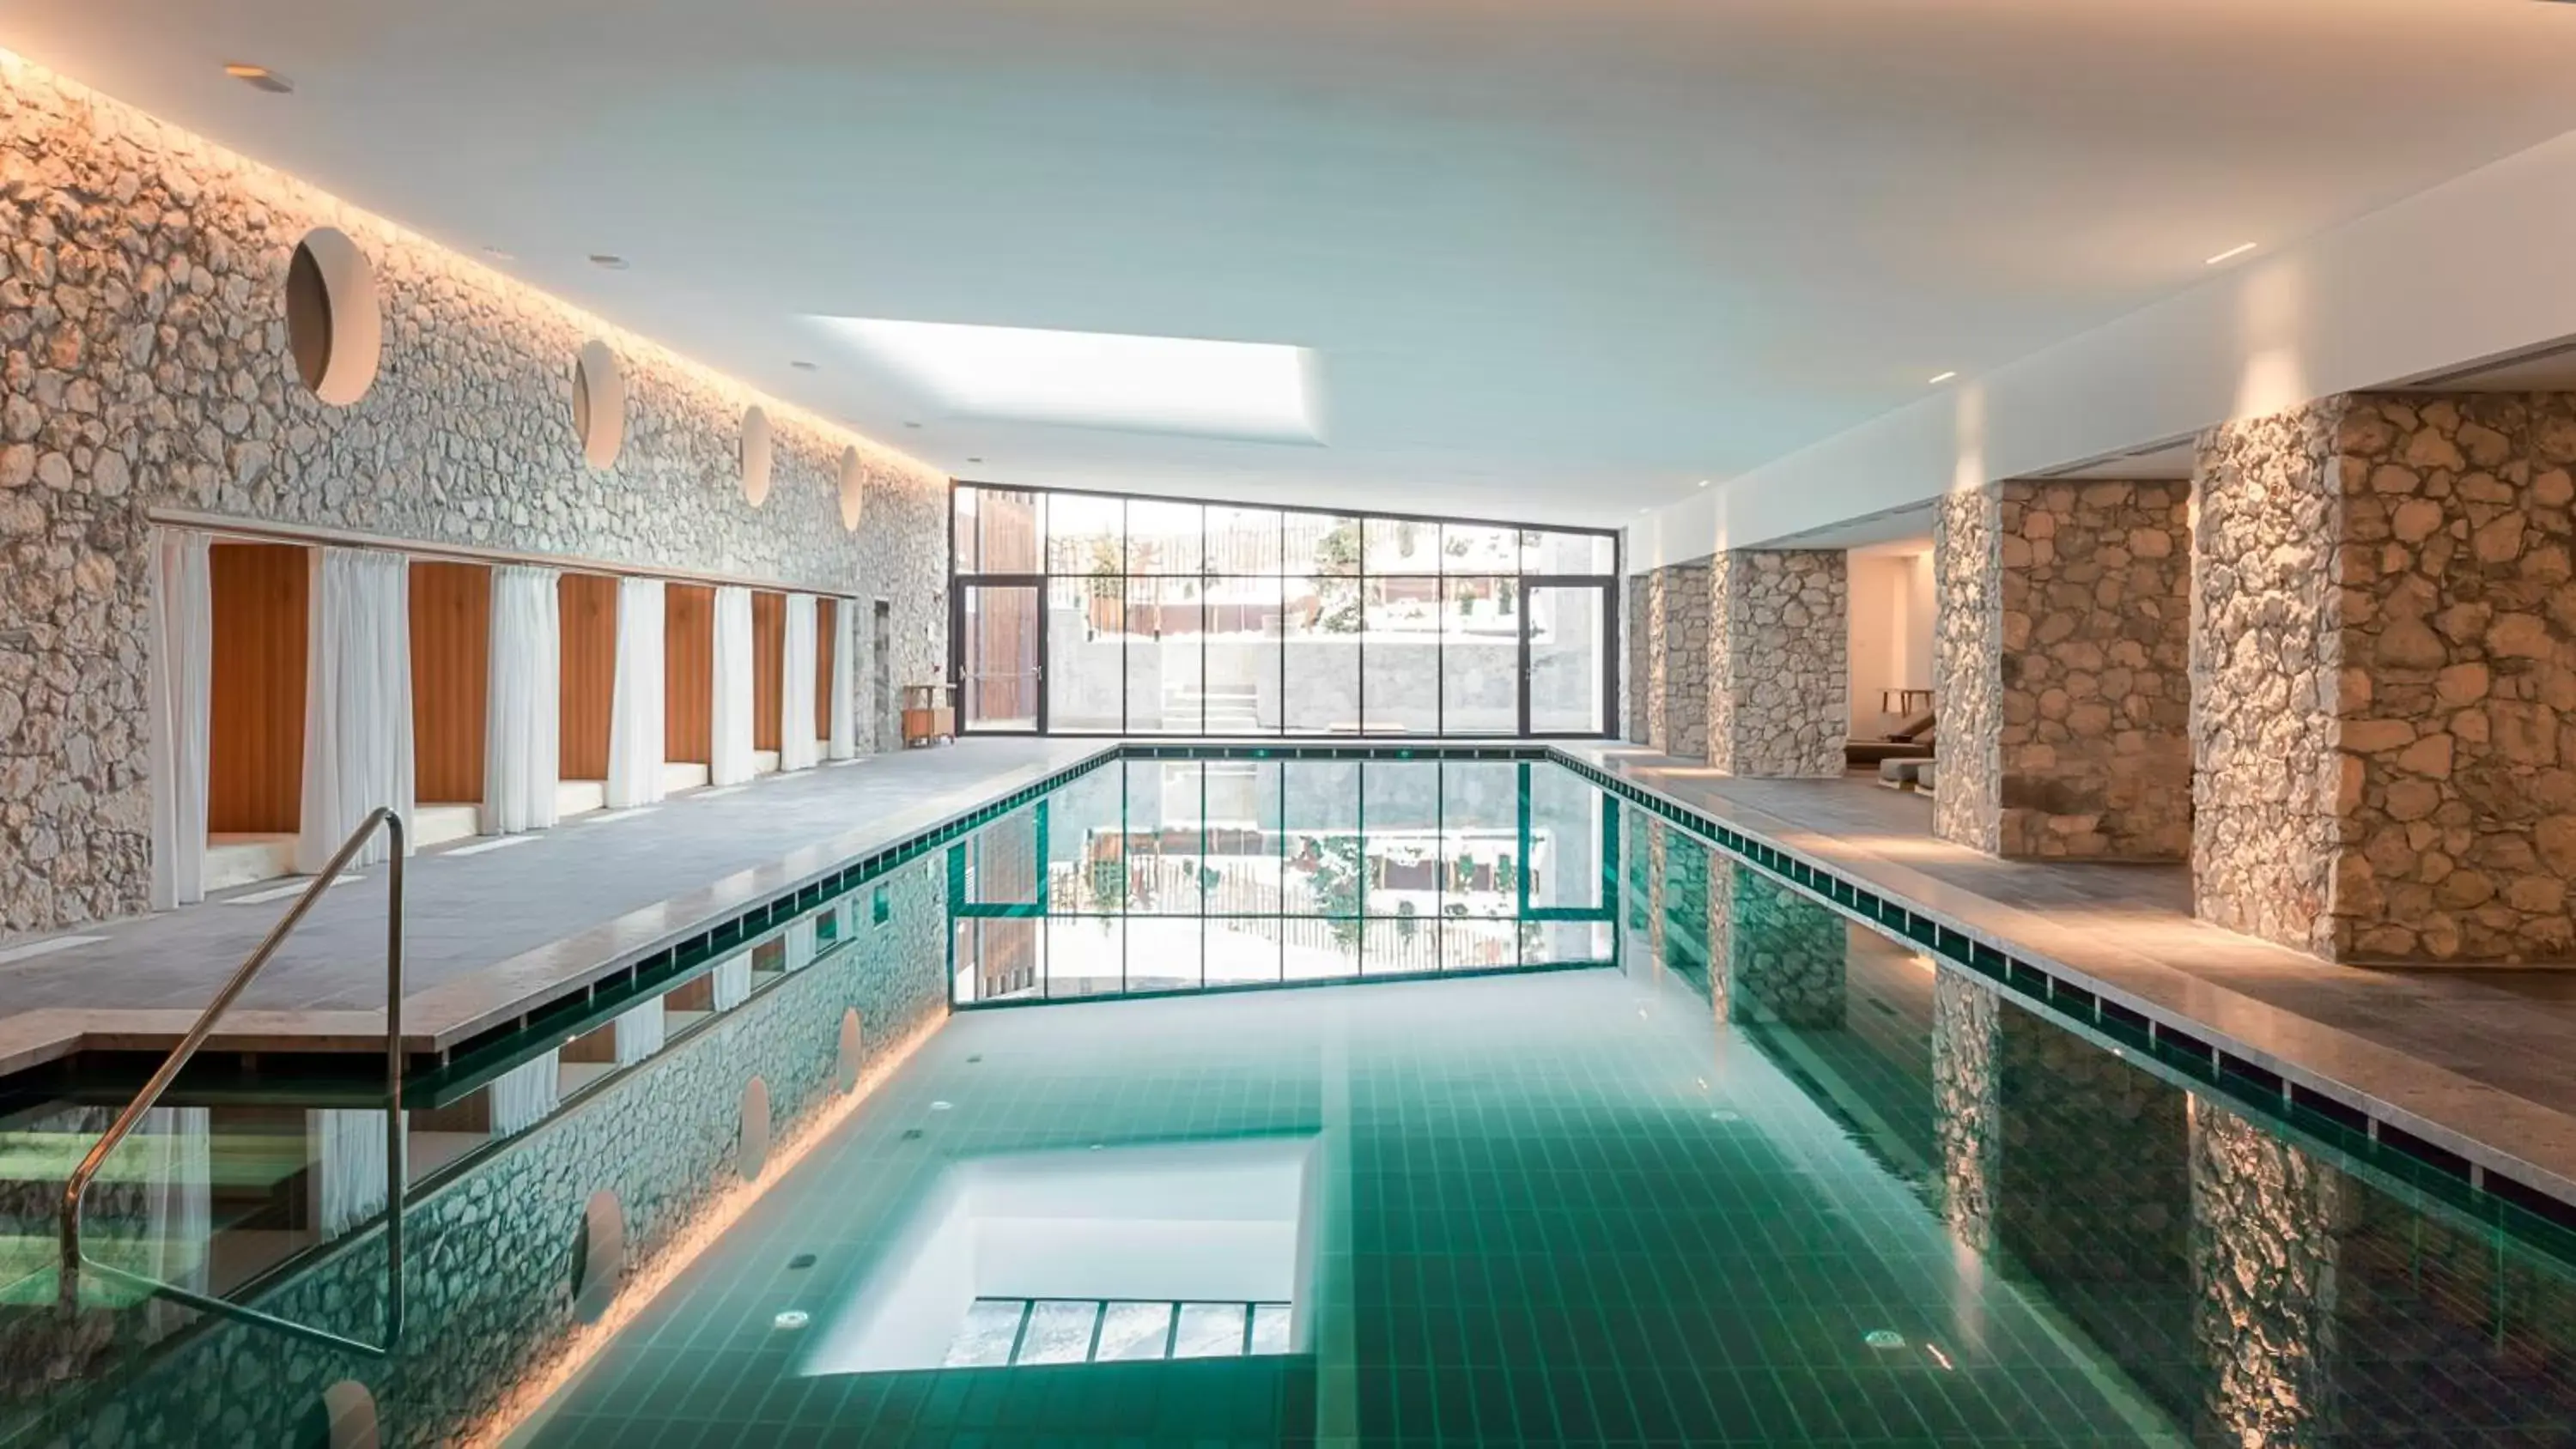 Spa and wellness centre/facilities, Swimming Pool in Faloria Mountain Spa Resort